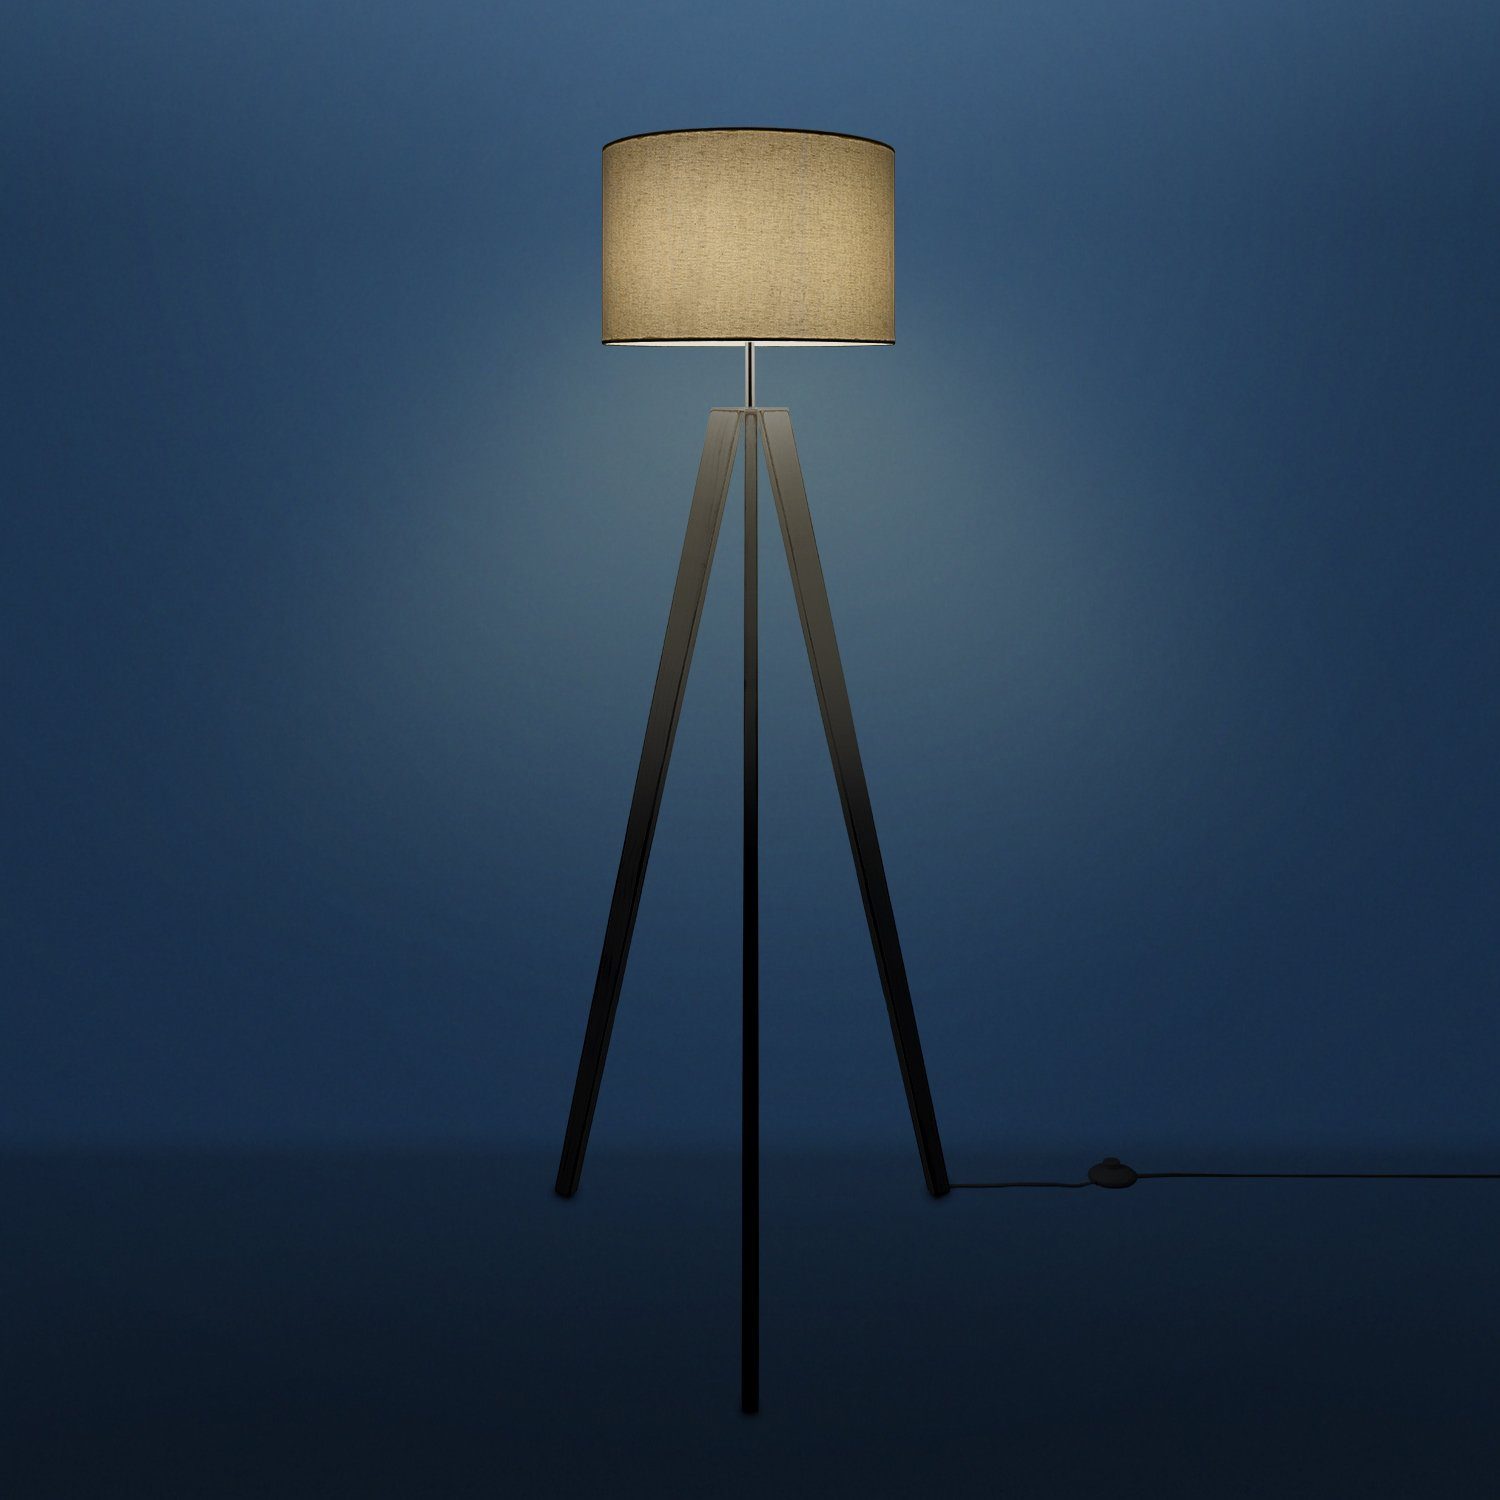 LED E27 Stehlampe Vintage Wohnzimmer Lampe Paco Skandinavischer Home Color, Stehlampe Fuß Stil ohne Leuchtmittel, Canvas uni